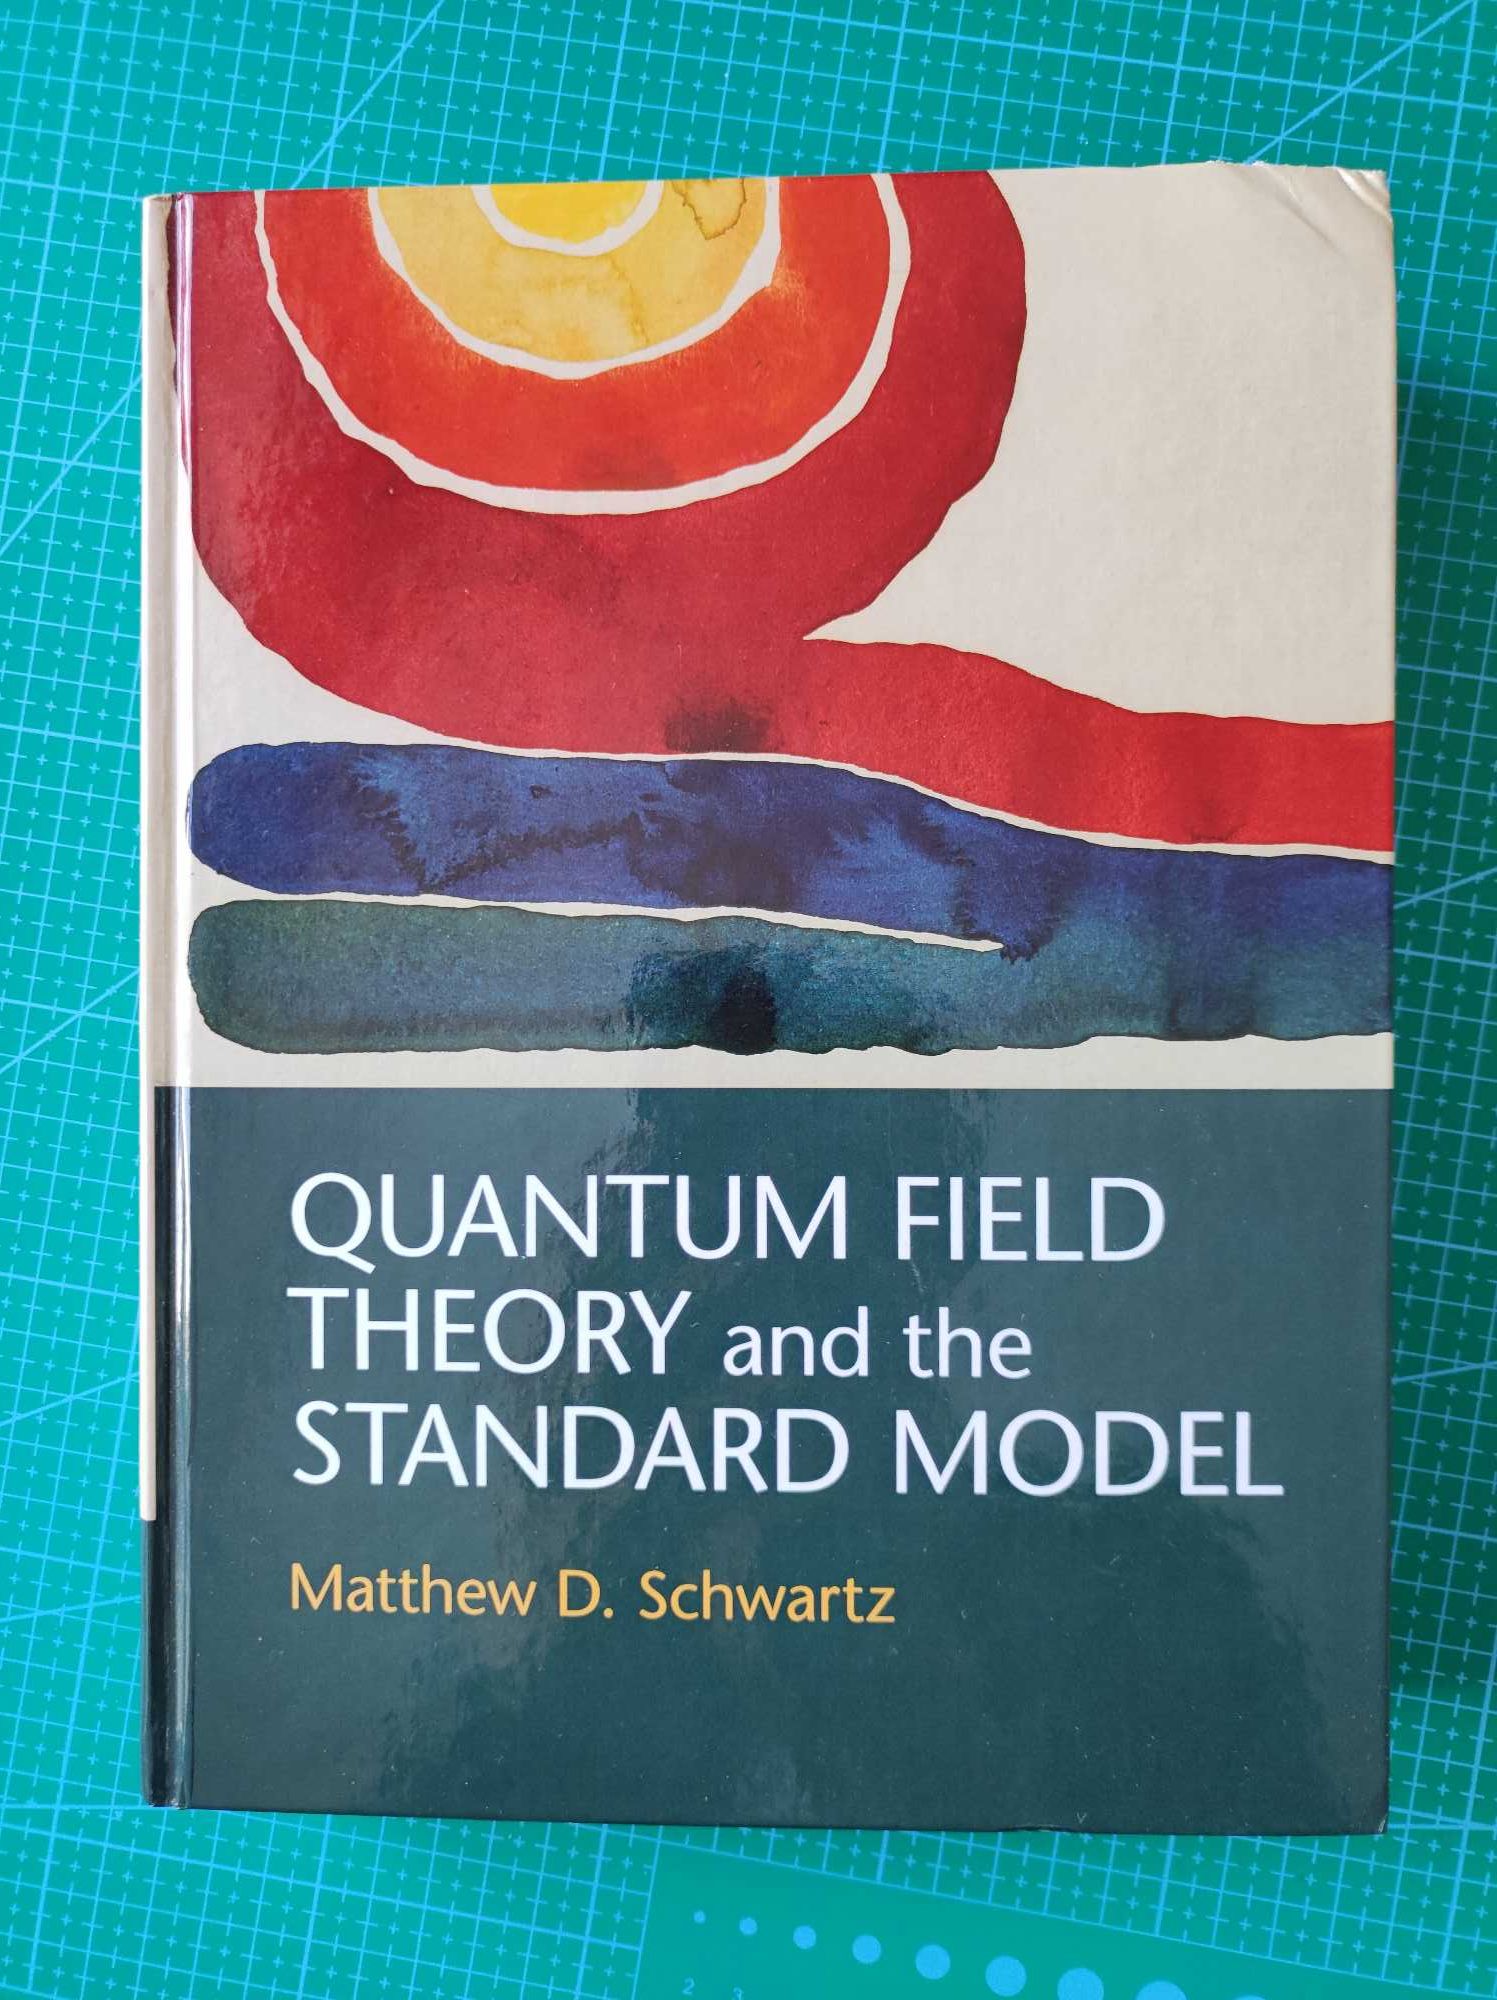 Quantum field theory and the Standard Model, Matthew D. Schwartz